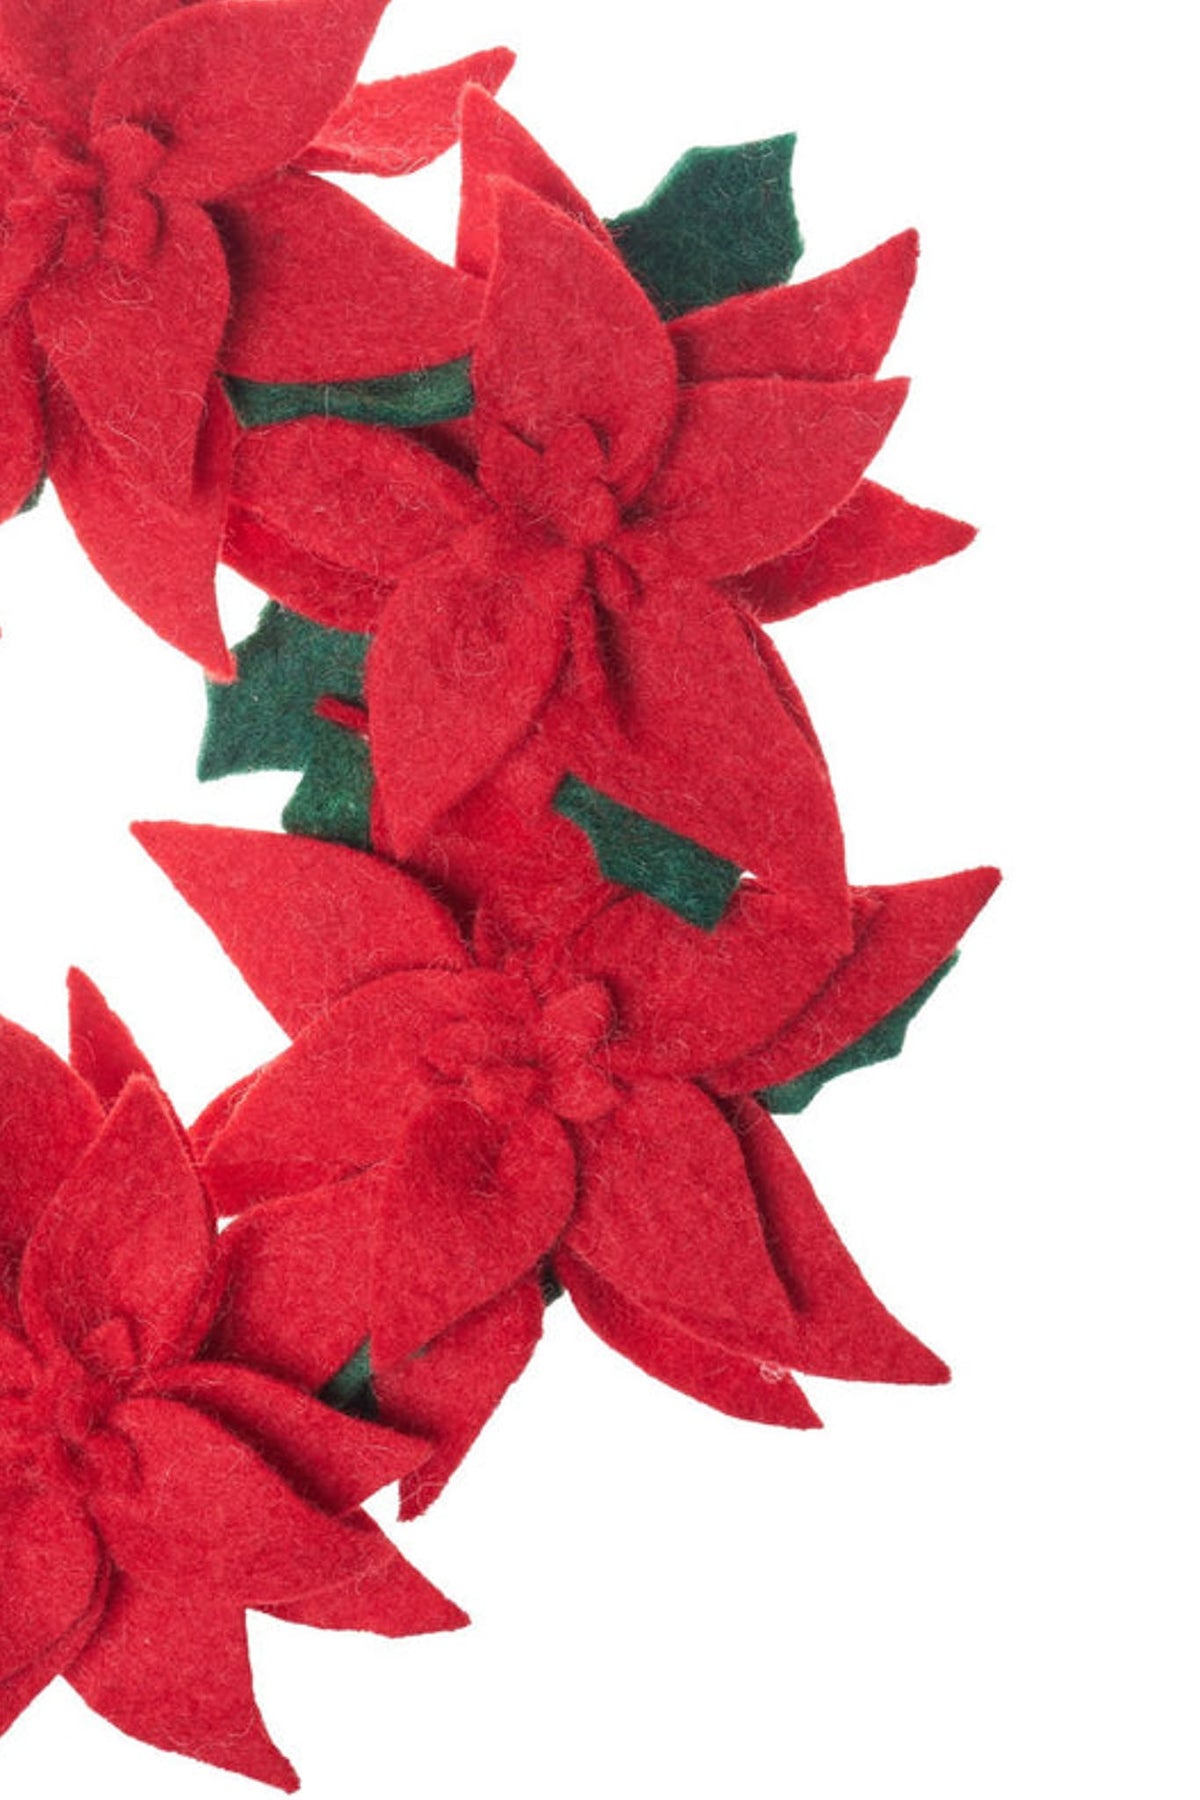 Global Goods Partners Felt Red Poinsettia Wreath